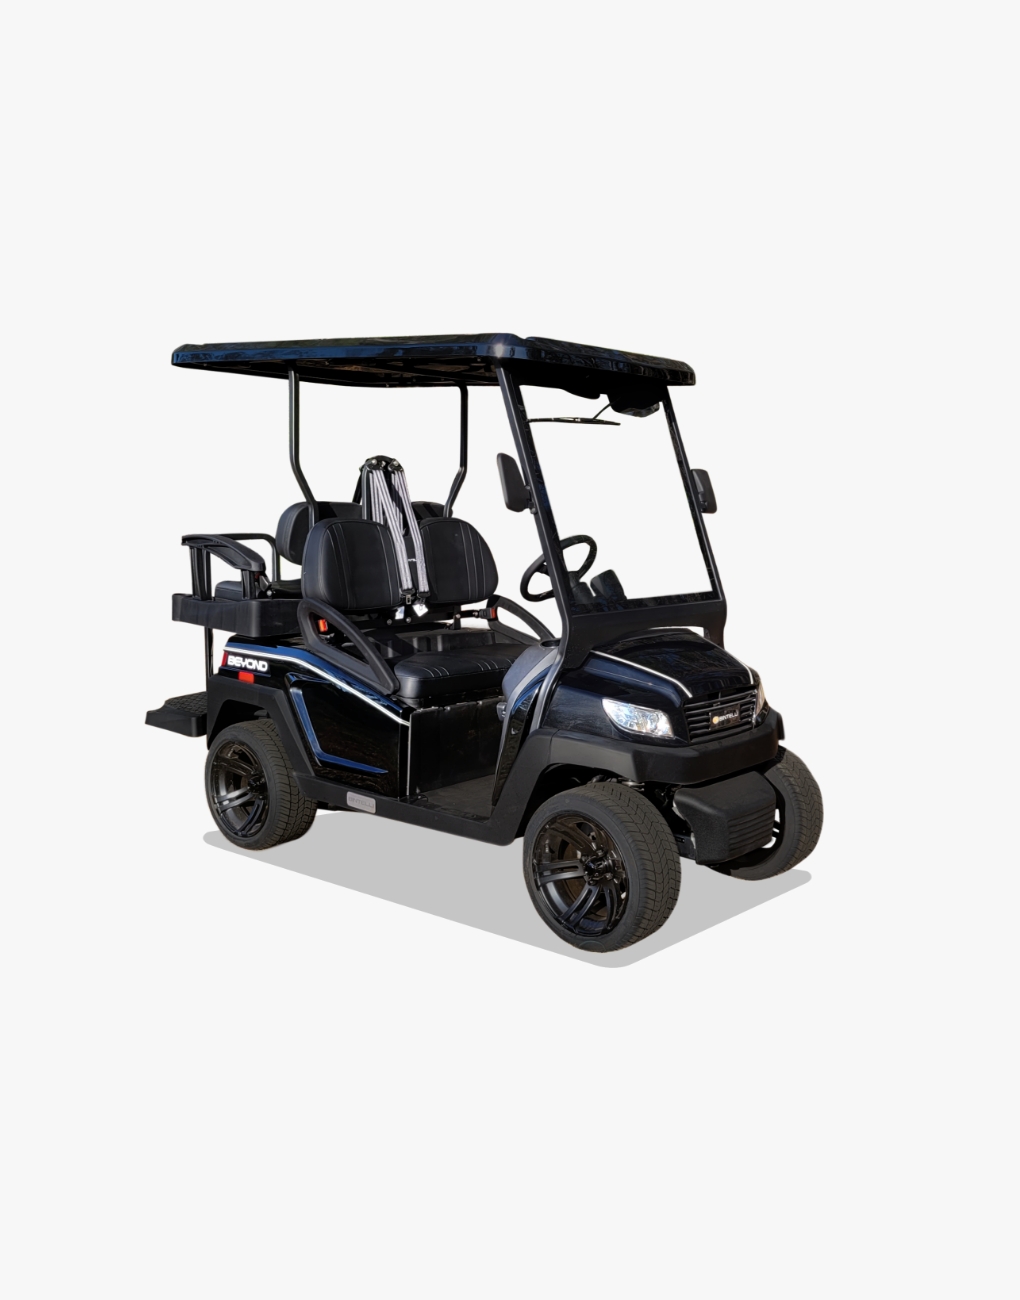 bintelli golf cart beyond model